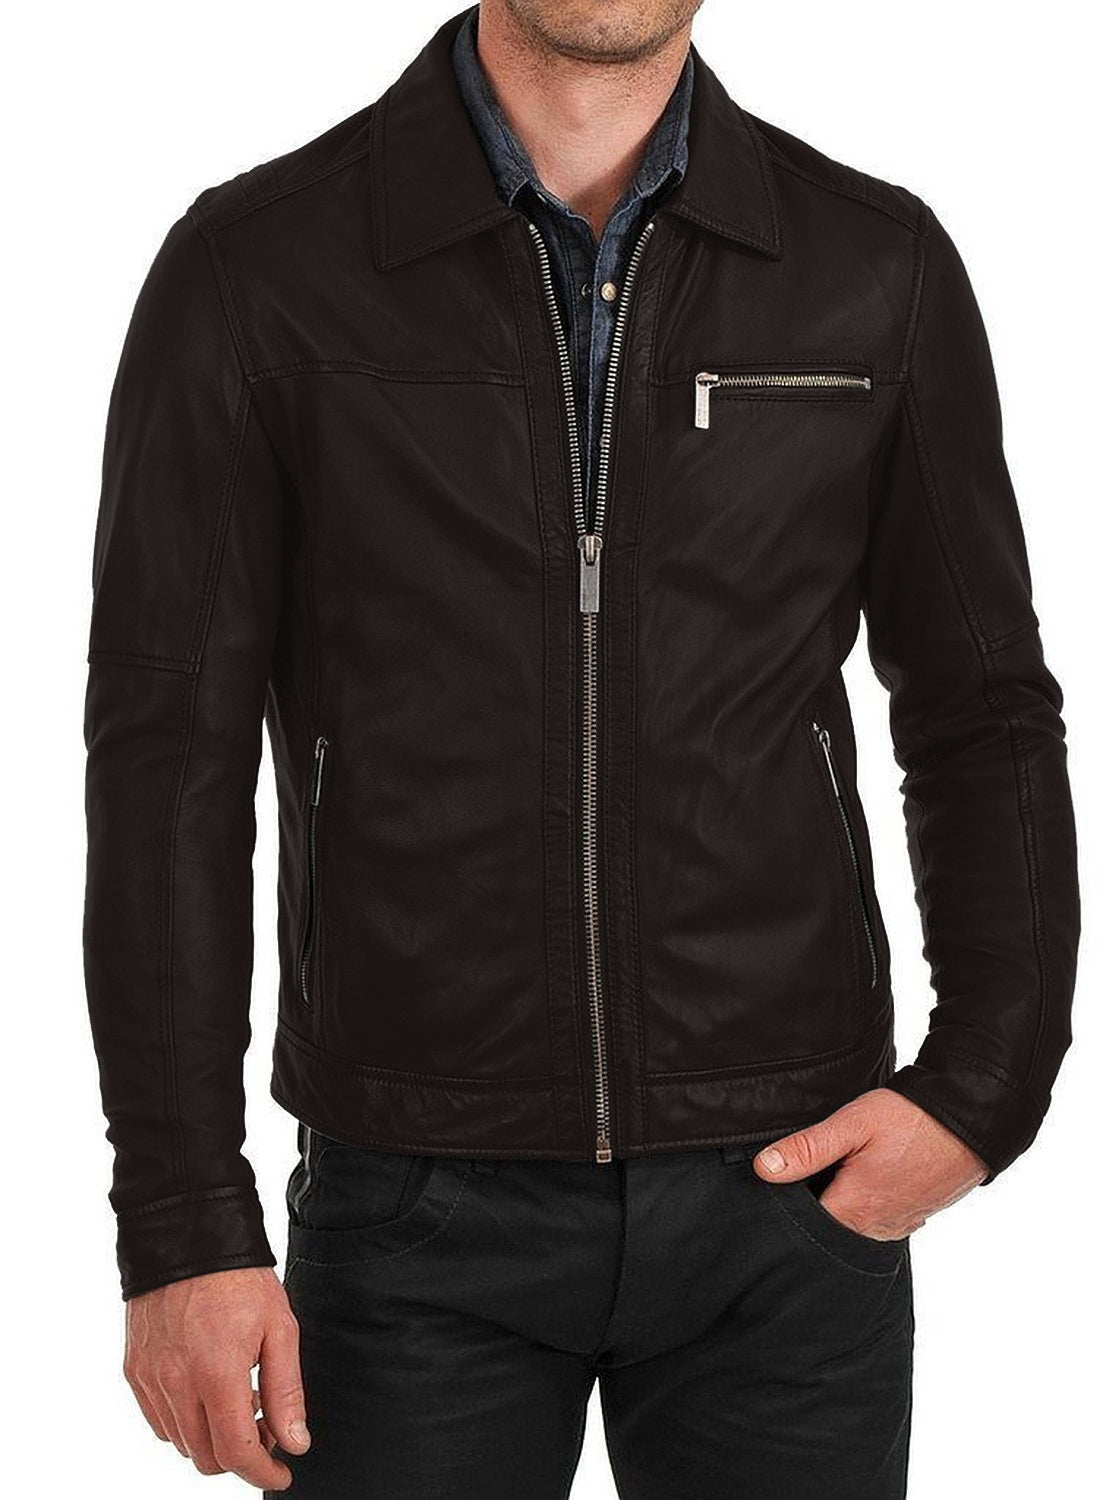 Leather Jackets Hub Mens Genuine Lambskin Leather Jacket (Black, Classic Jacket) - 1501091